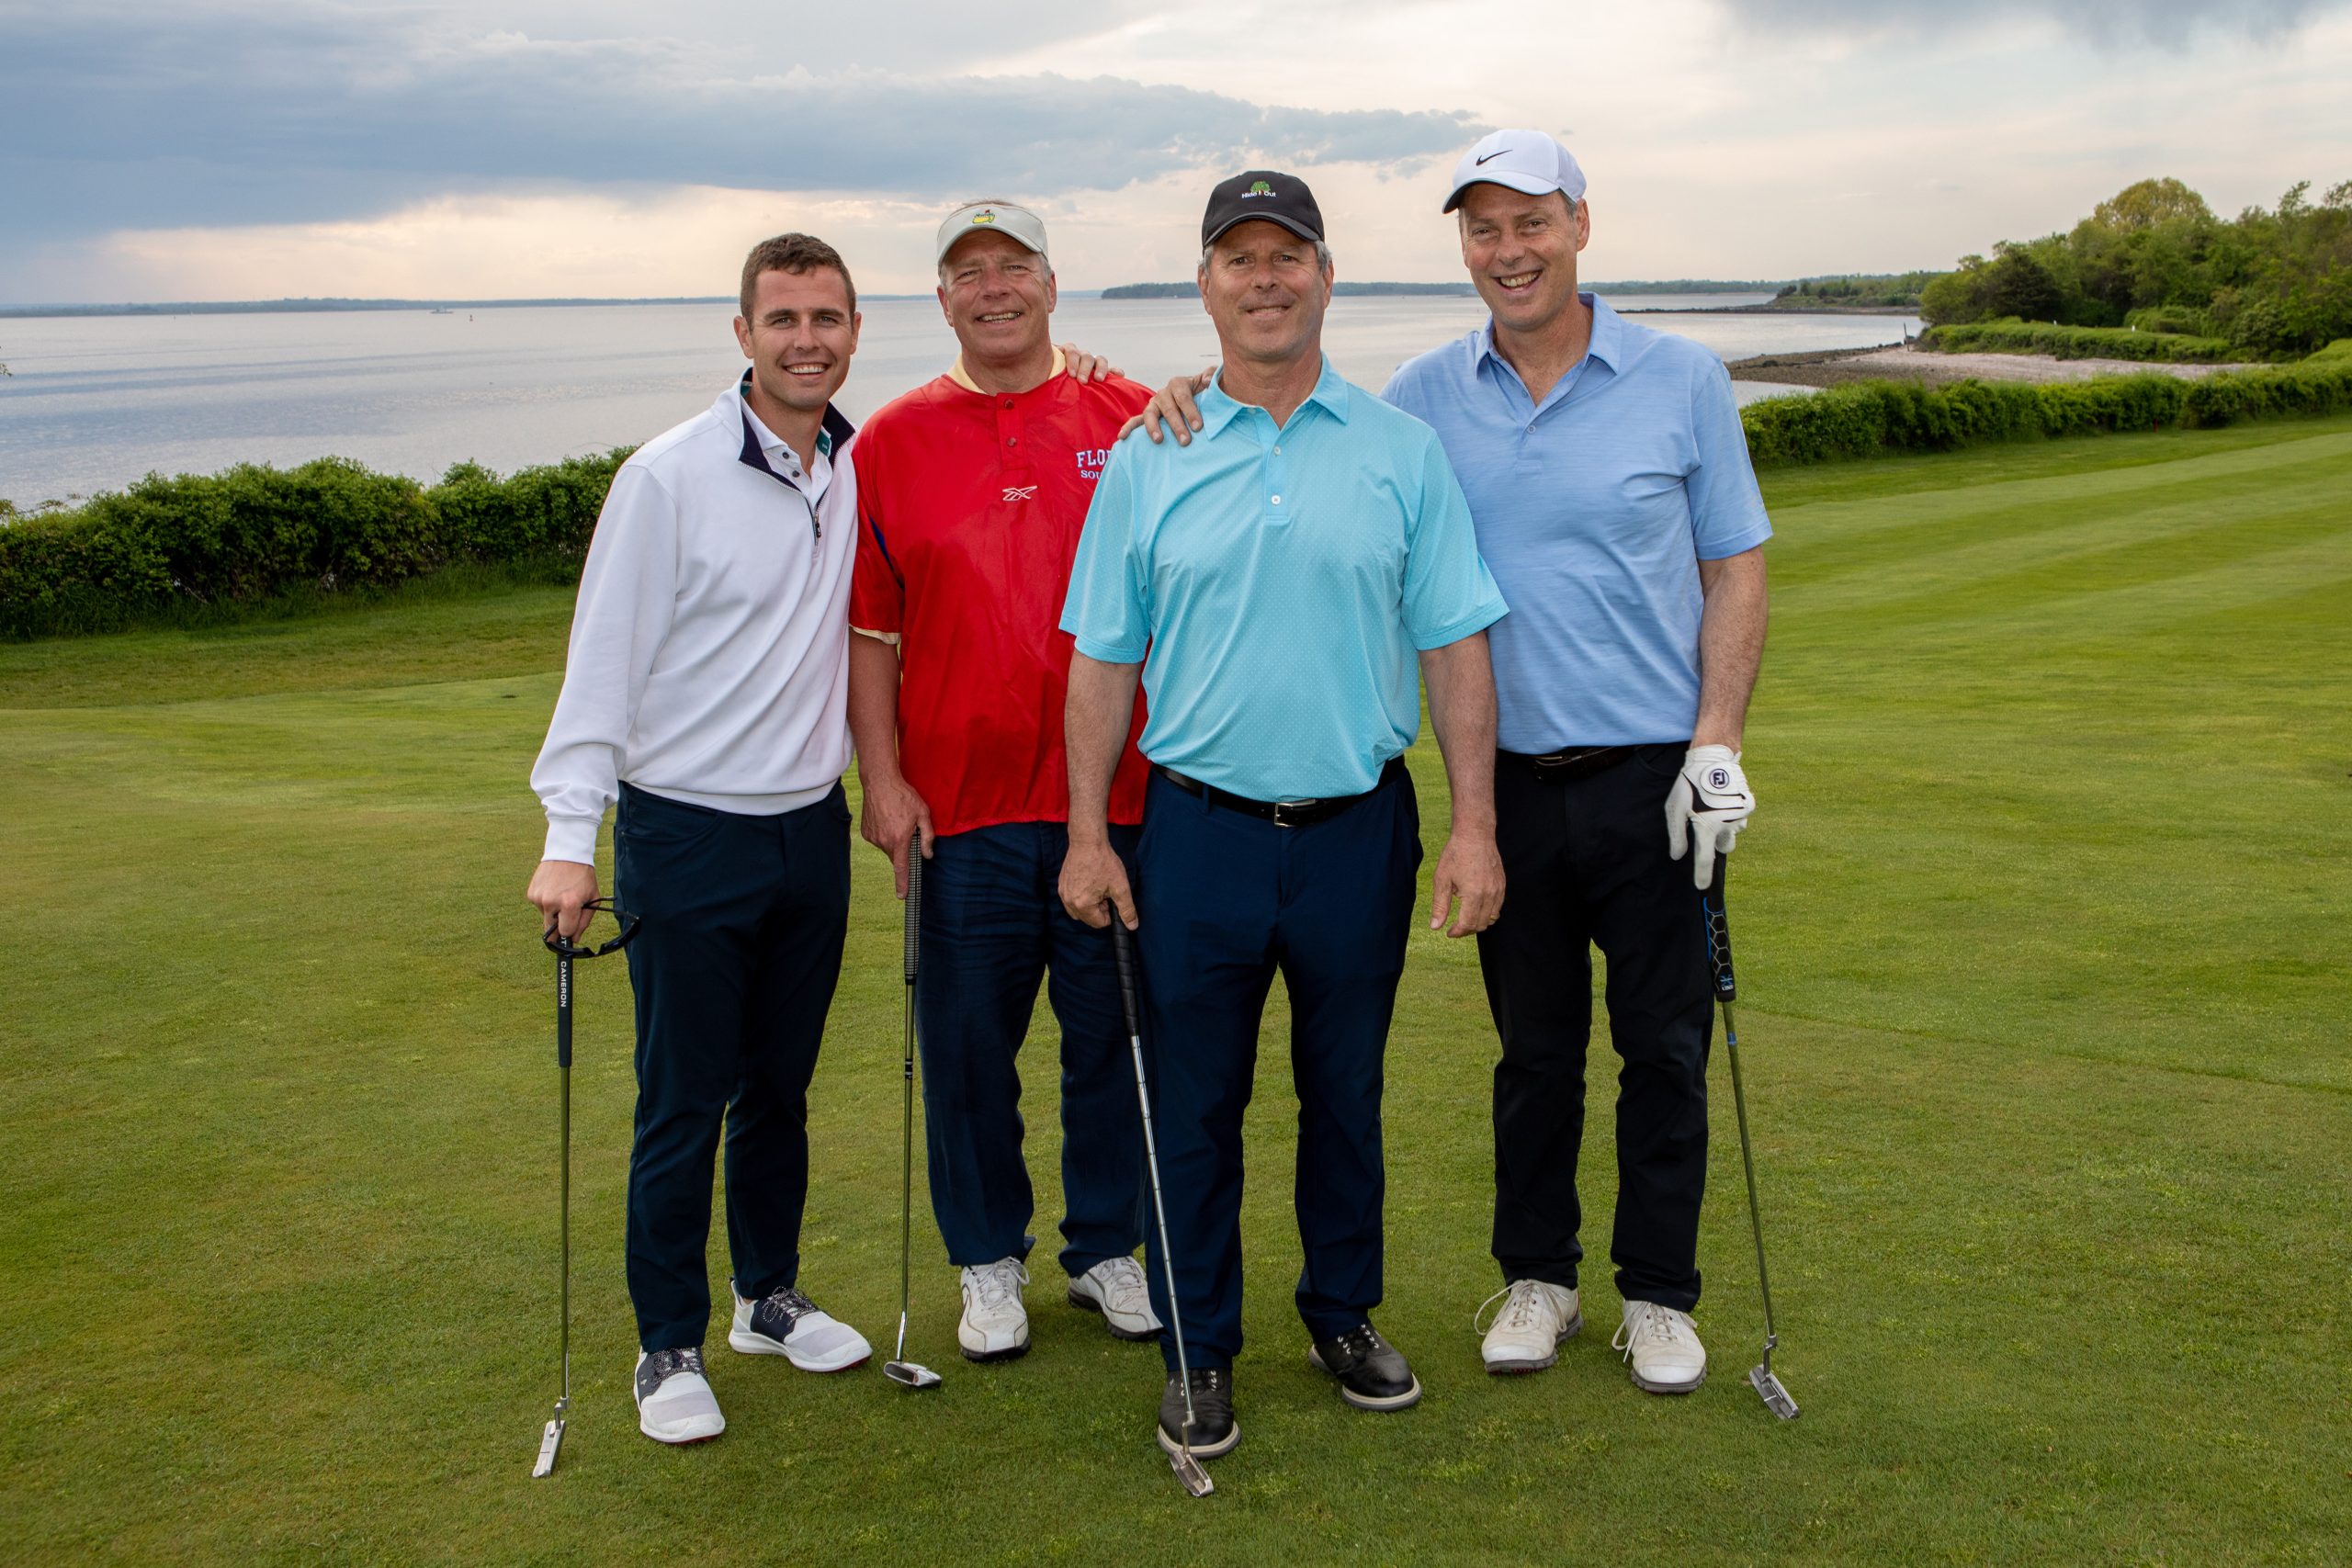 The Aquidneck Club to Host Newport Mental Health’s Annual Golf Tournament on June 17th